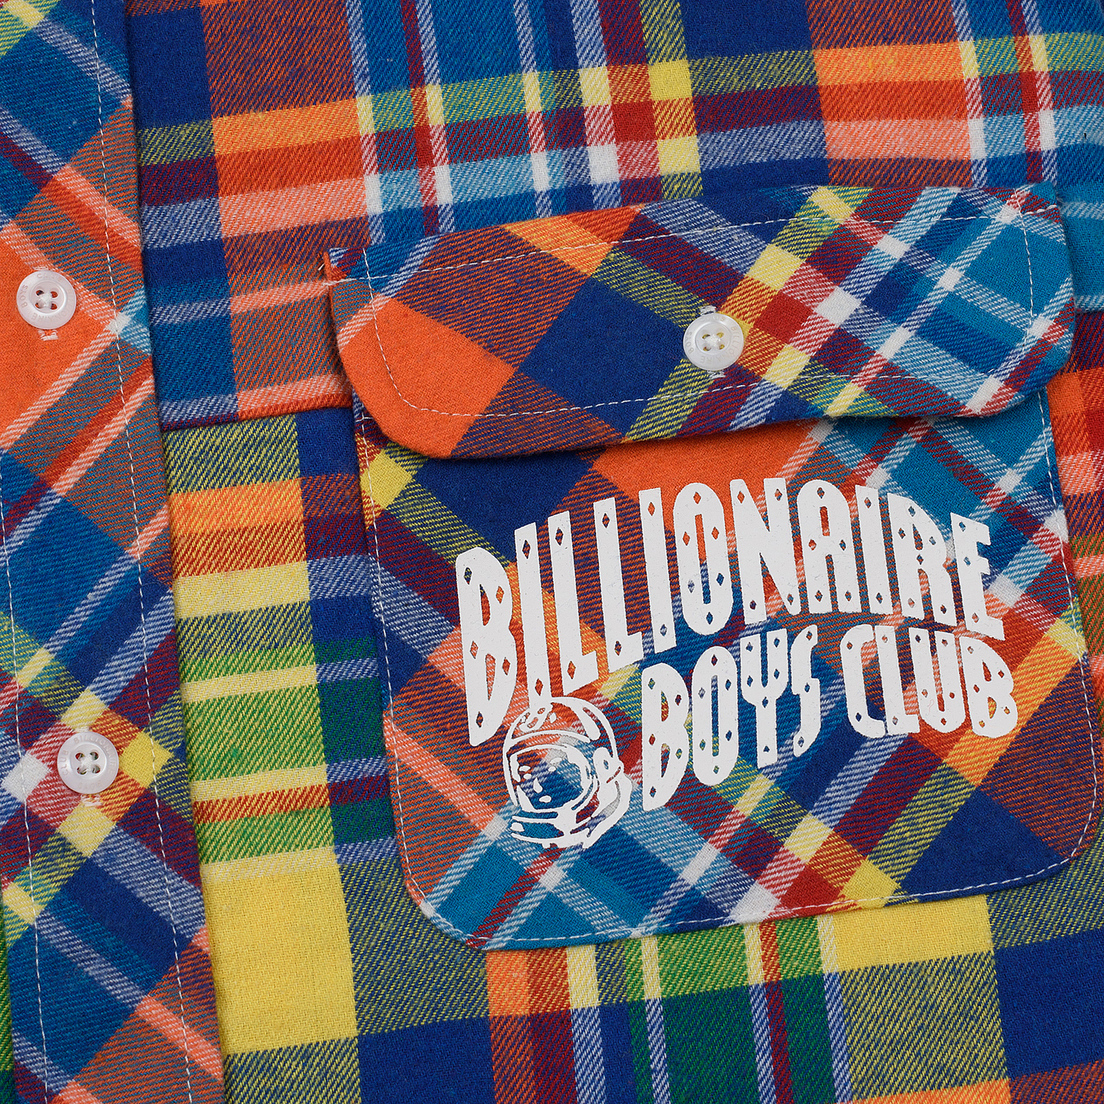 Billionaire Boys Club Мужская рубашка Multi Check Shirt